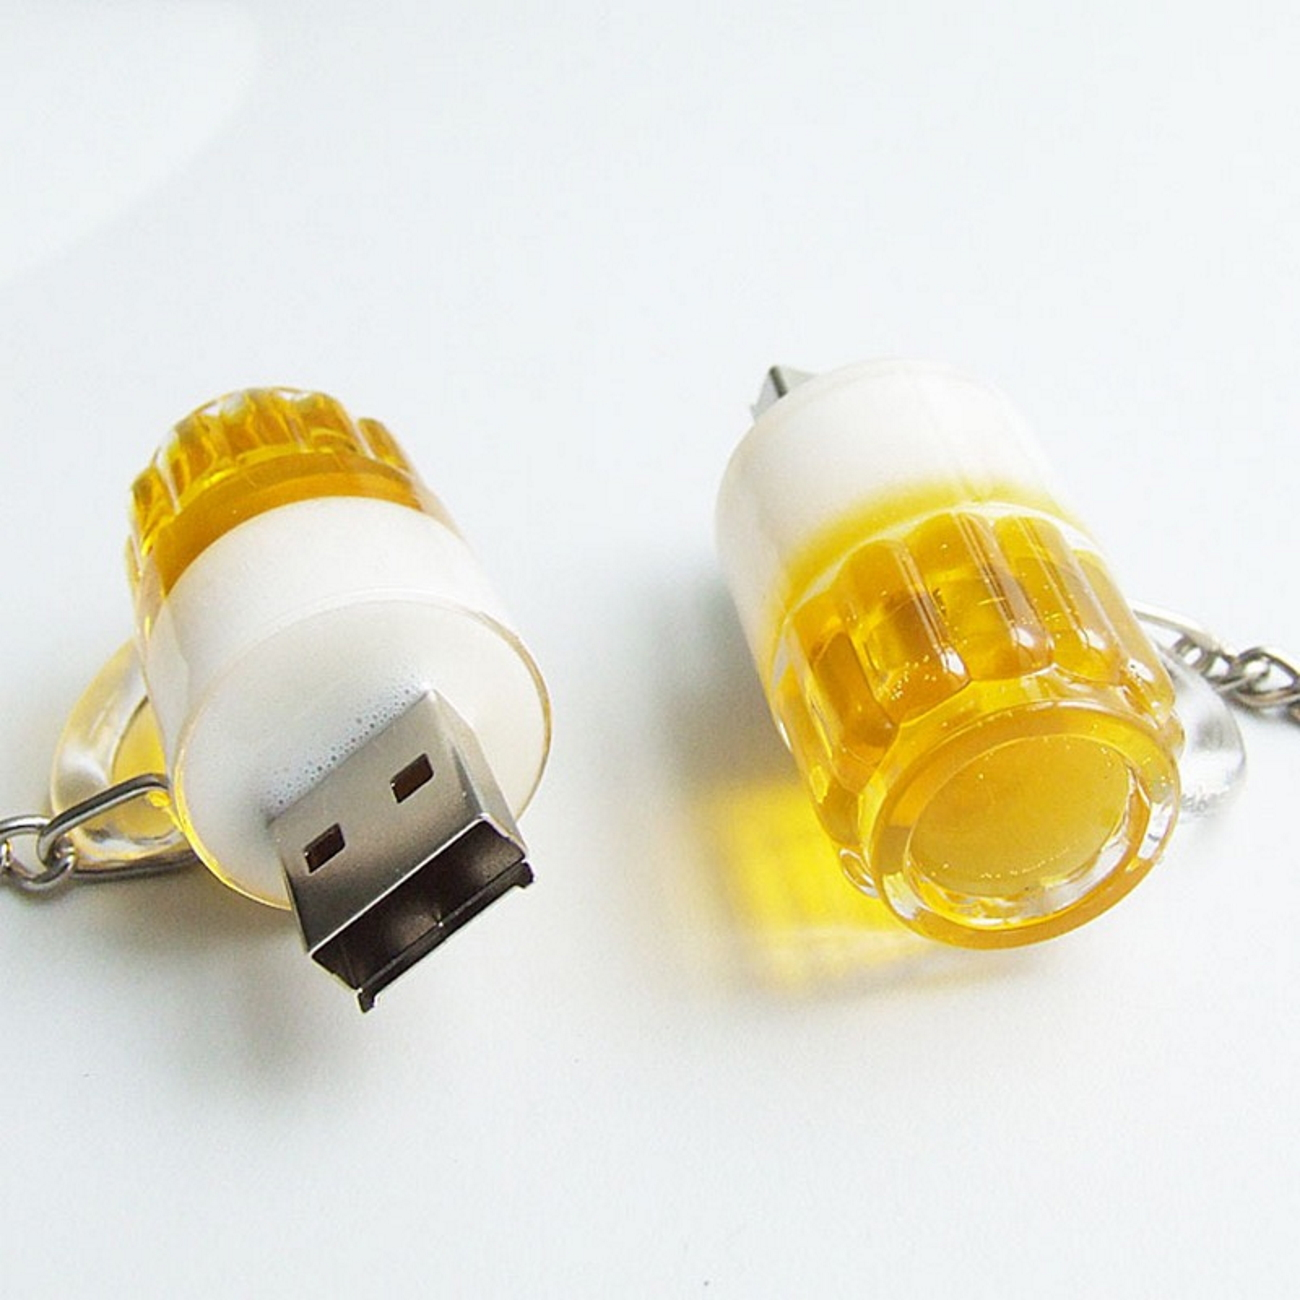 USB GERMANY ® Bierkrug USB-Stick (Mehrfarbig, 16 GB)